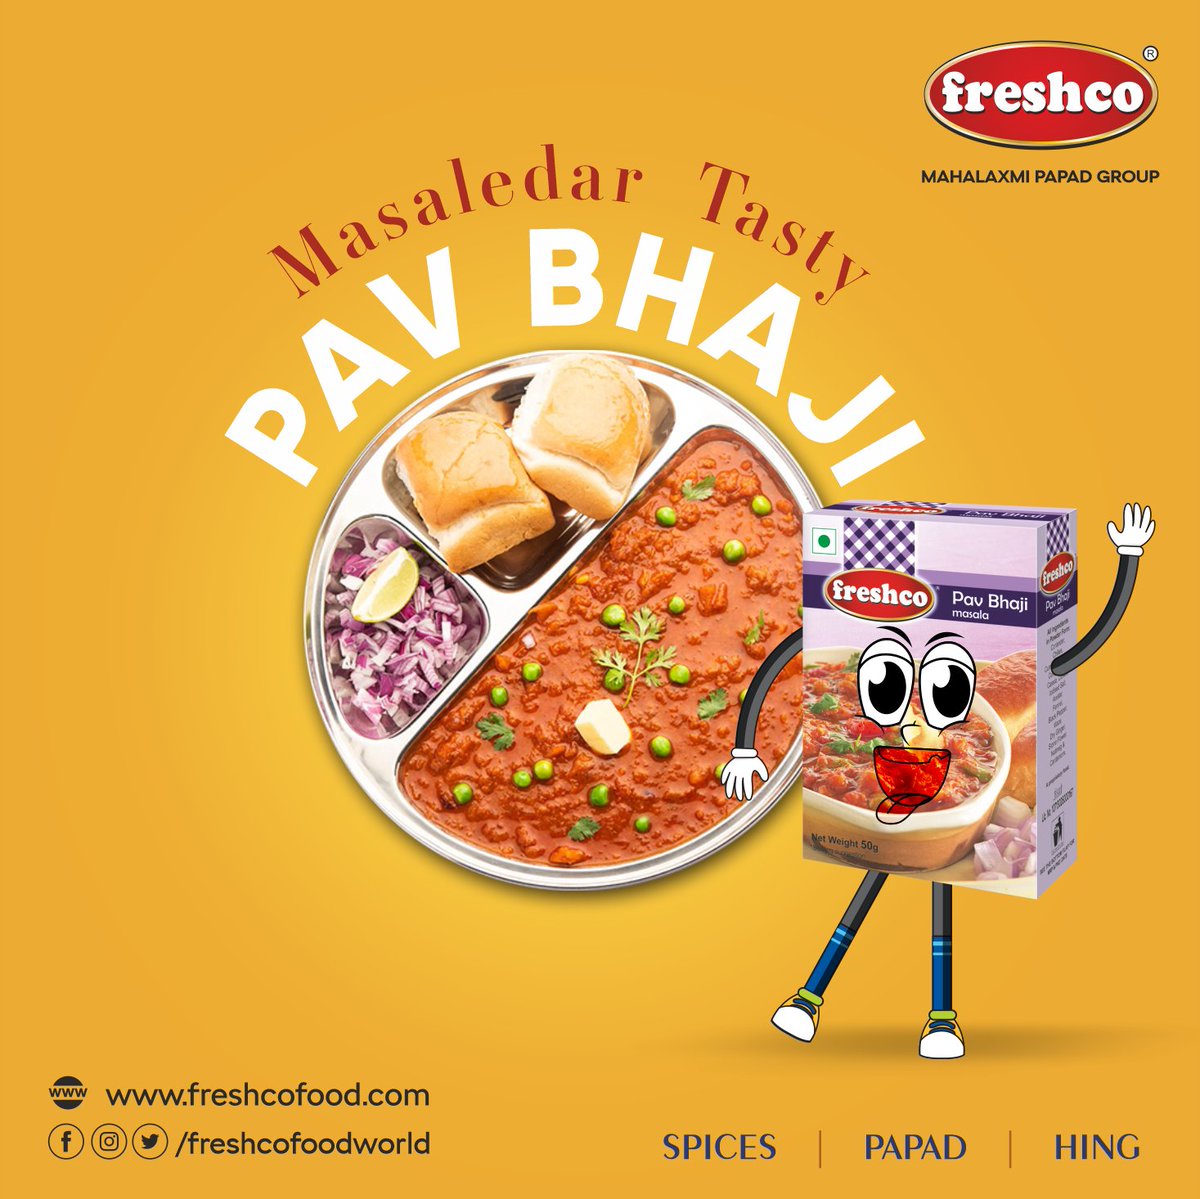 Enjoy This Monsoon with Masaledar Tasty Freshco Pav Bhaji Masala

👉 Try Our Wide Range of Varieties of Masale Visit : freshcofood.com

#FreshcoFoodWorld #Freshco #FreshcoPavbhajimasala #PavBhaji #yummy #pavbhaji😍 #pavbhajilovers😍 #pavbhajirecipes #instafood #foodgasm